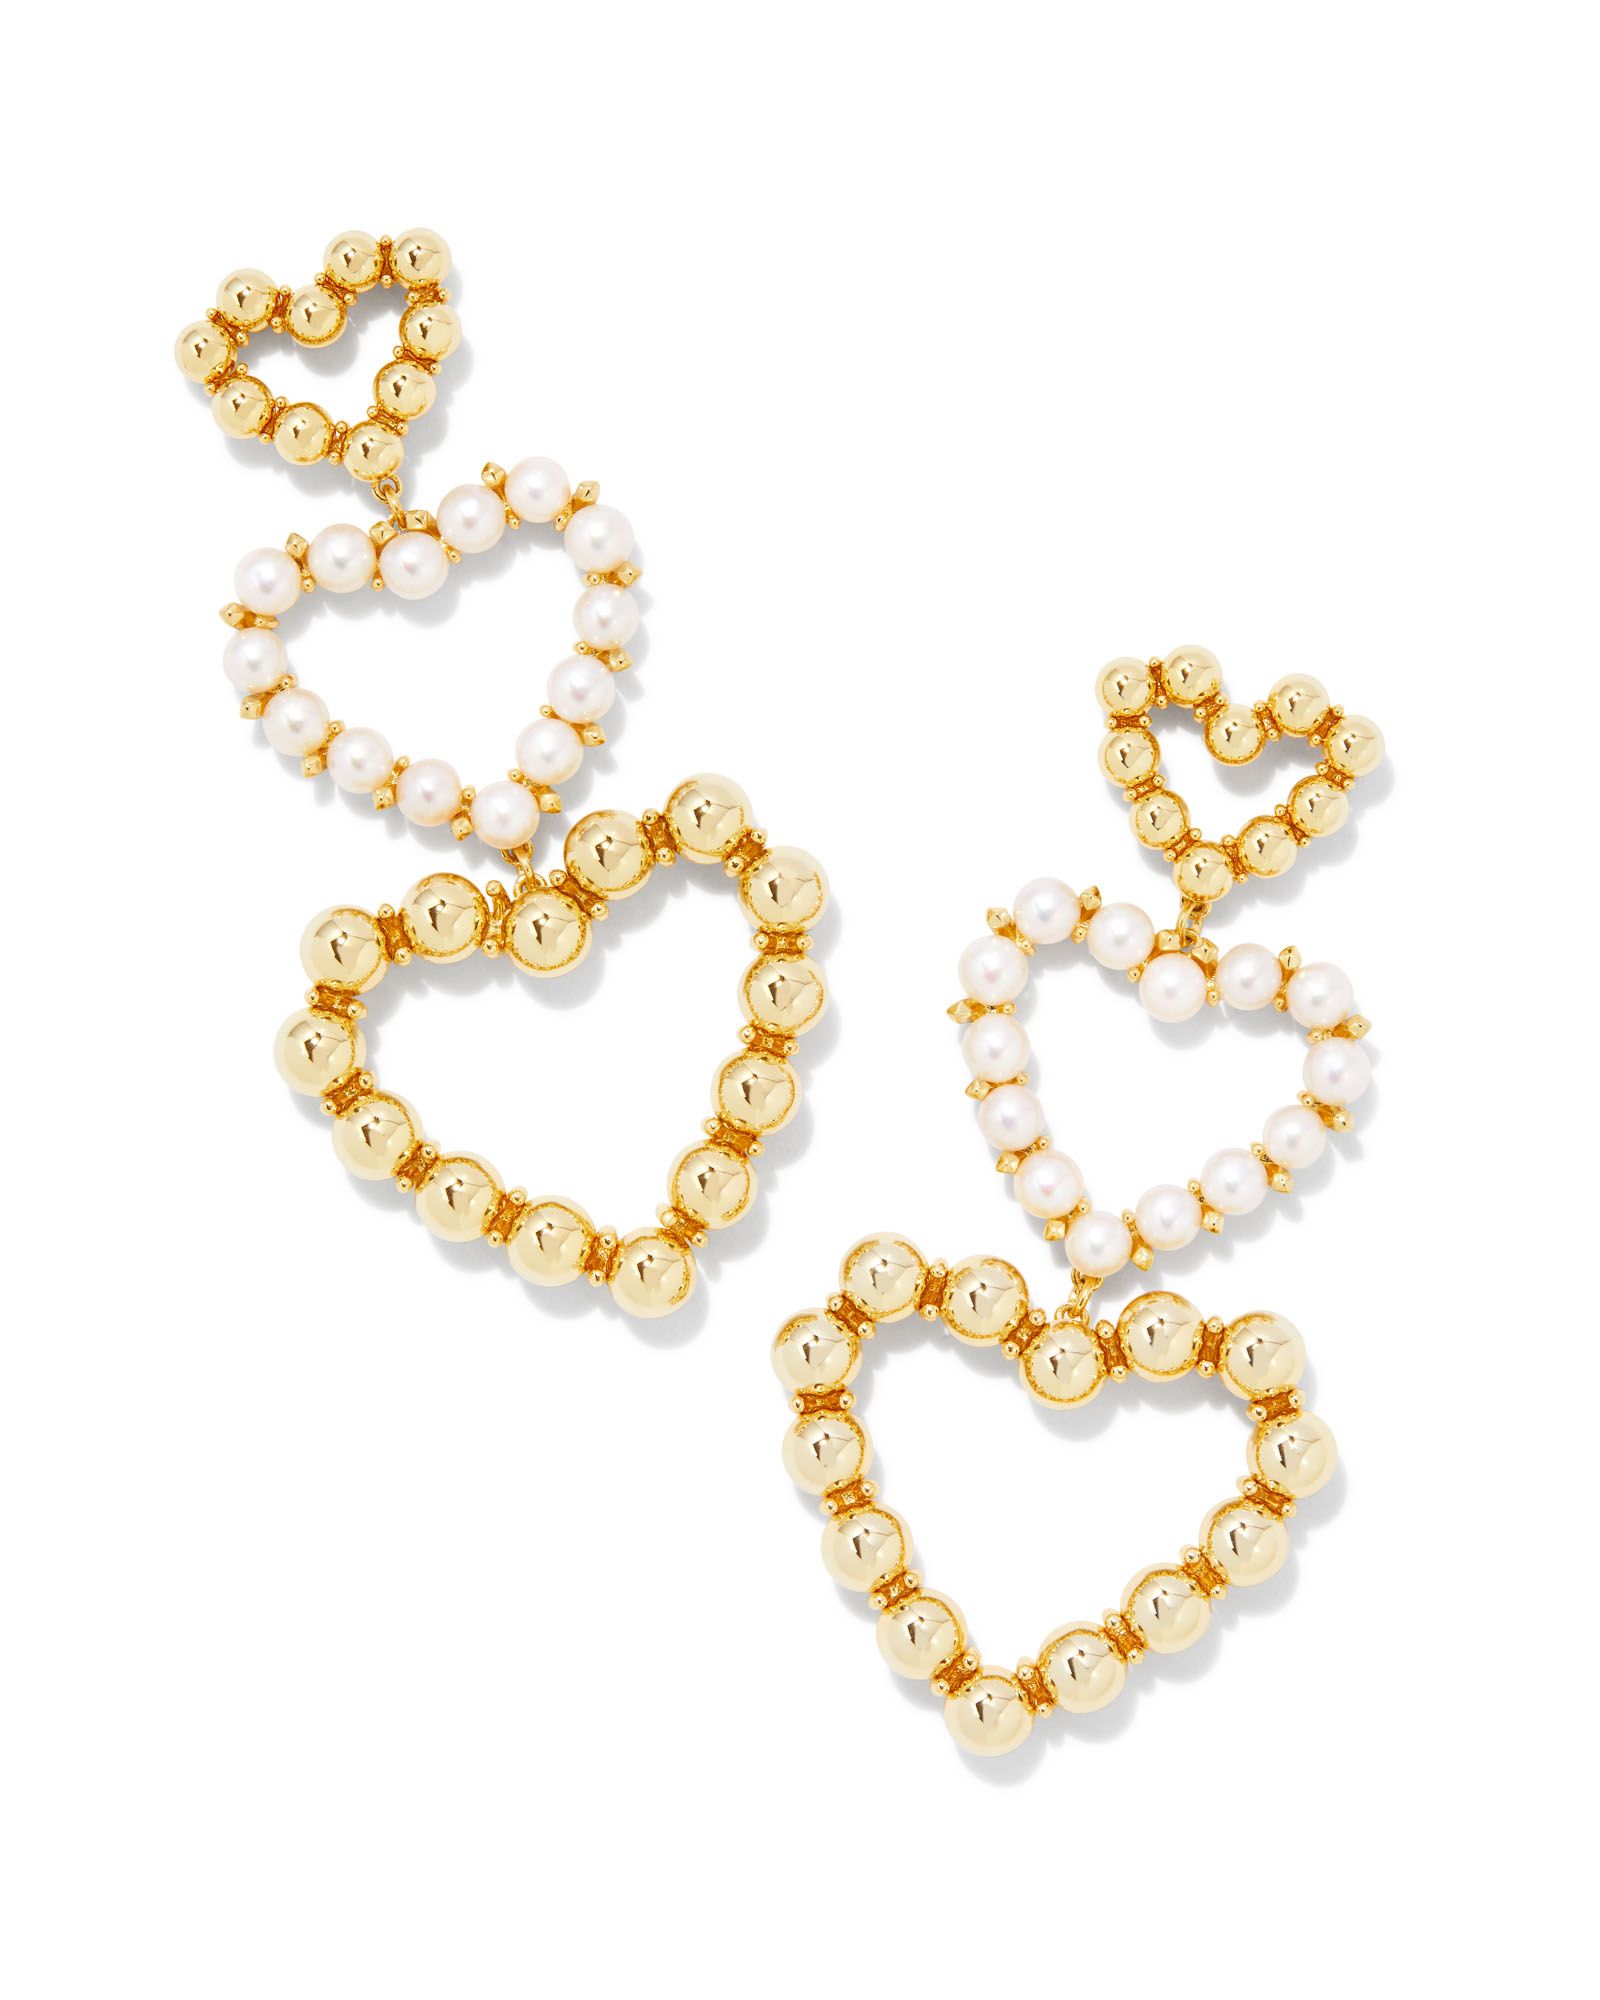 Ashton Gold Pearl Heart Statement Earrings in White Pearl | Kendra Scott | Kendra Scott